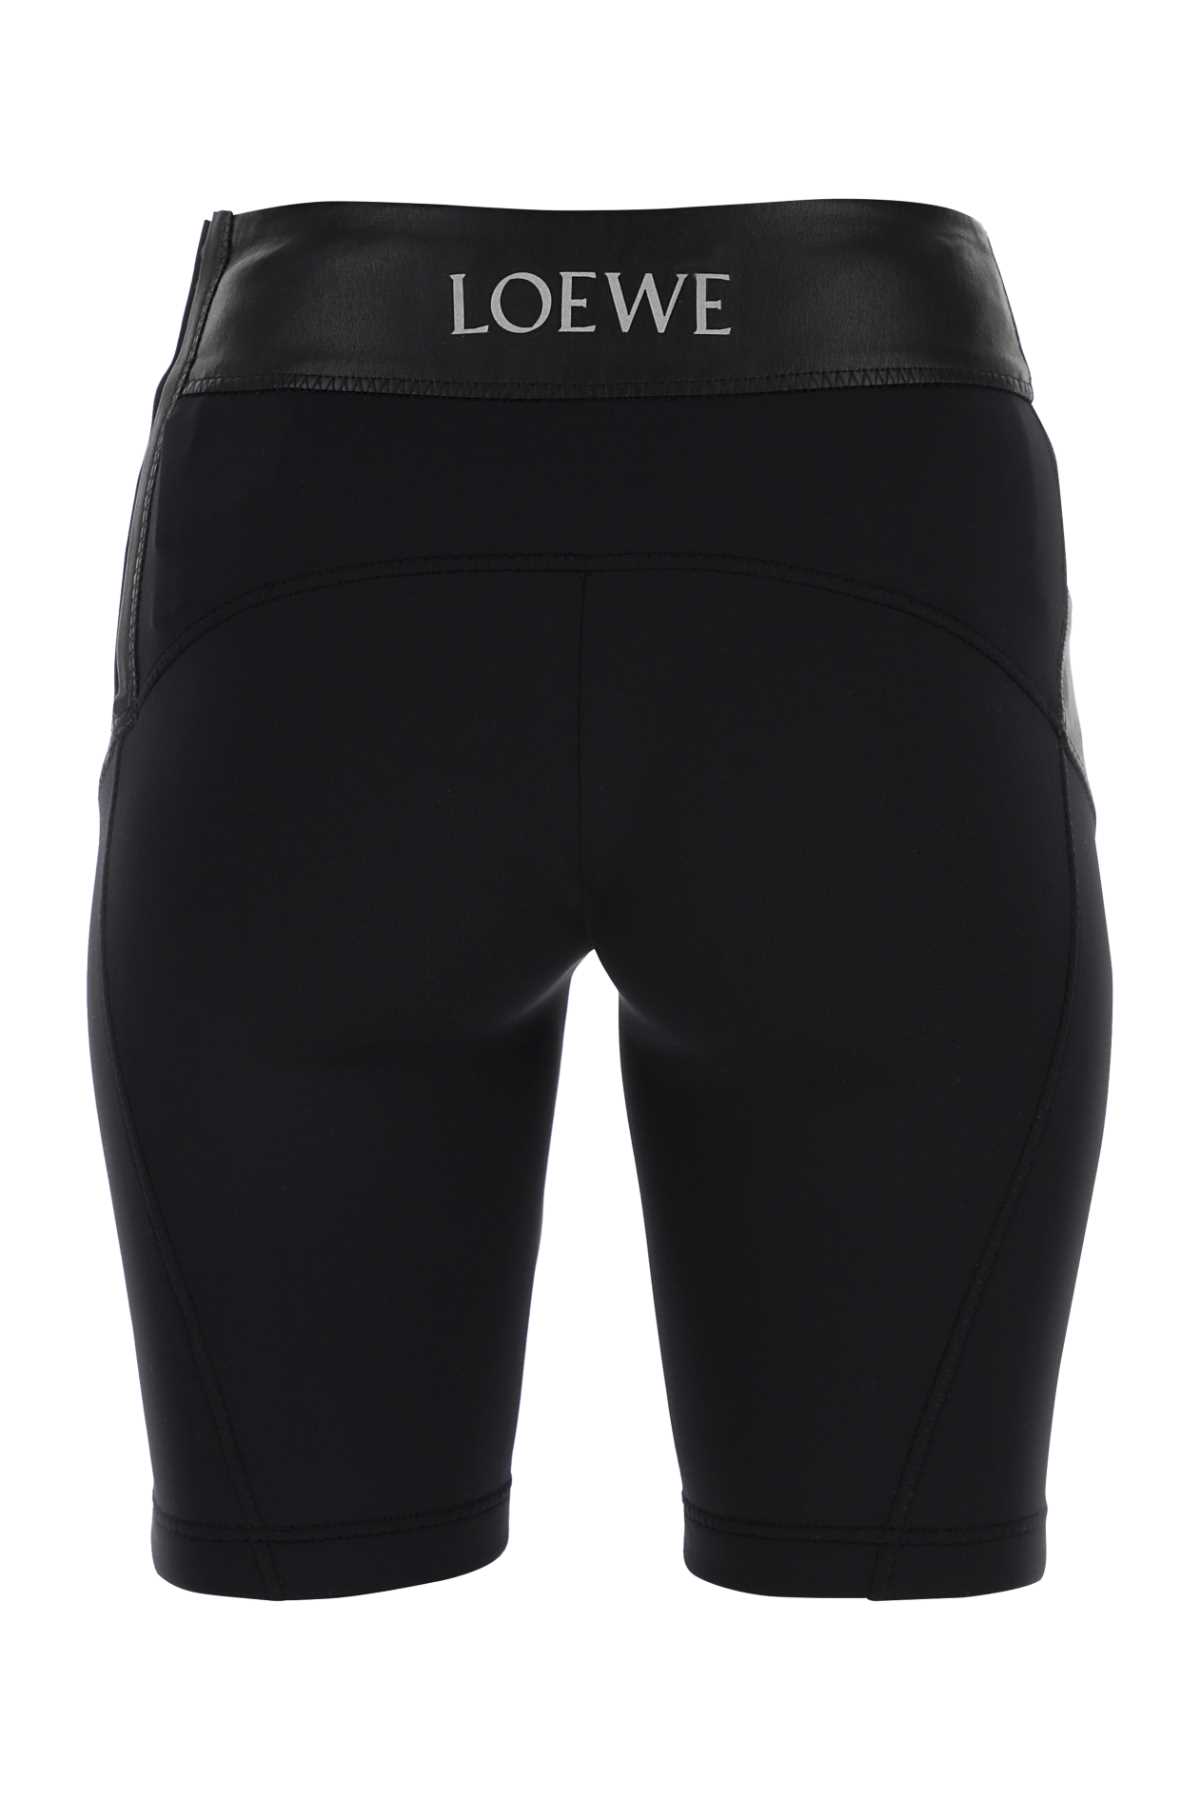 Loewe Black Leather And Fabric Leggings